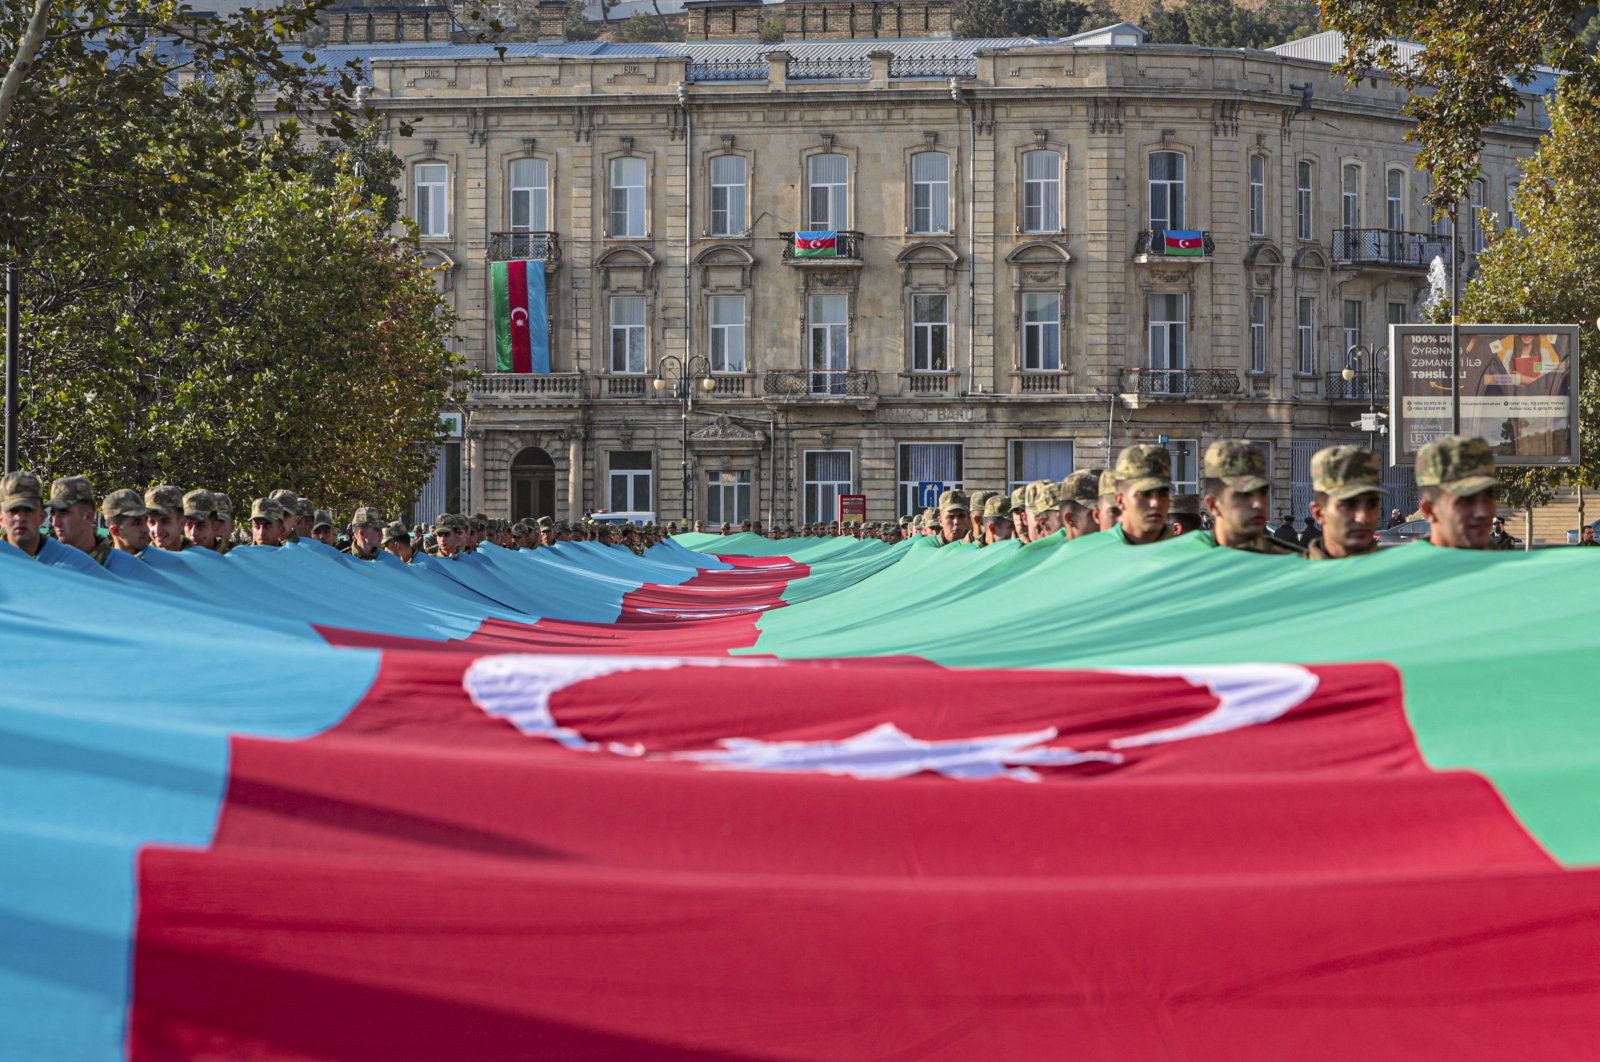 Azerbaijani soldiers carry a large-scale national flag on the anniversary of the end of the 2020 war over the Nagorno-Karabakh region between Azerbaijan and Armenia, in Baku, Azerbaijan, Nov. 8, 2021. (EPA Photo)